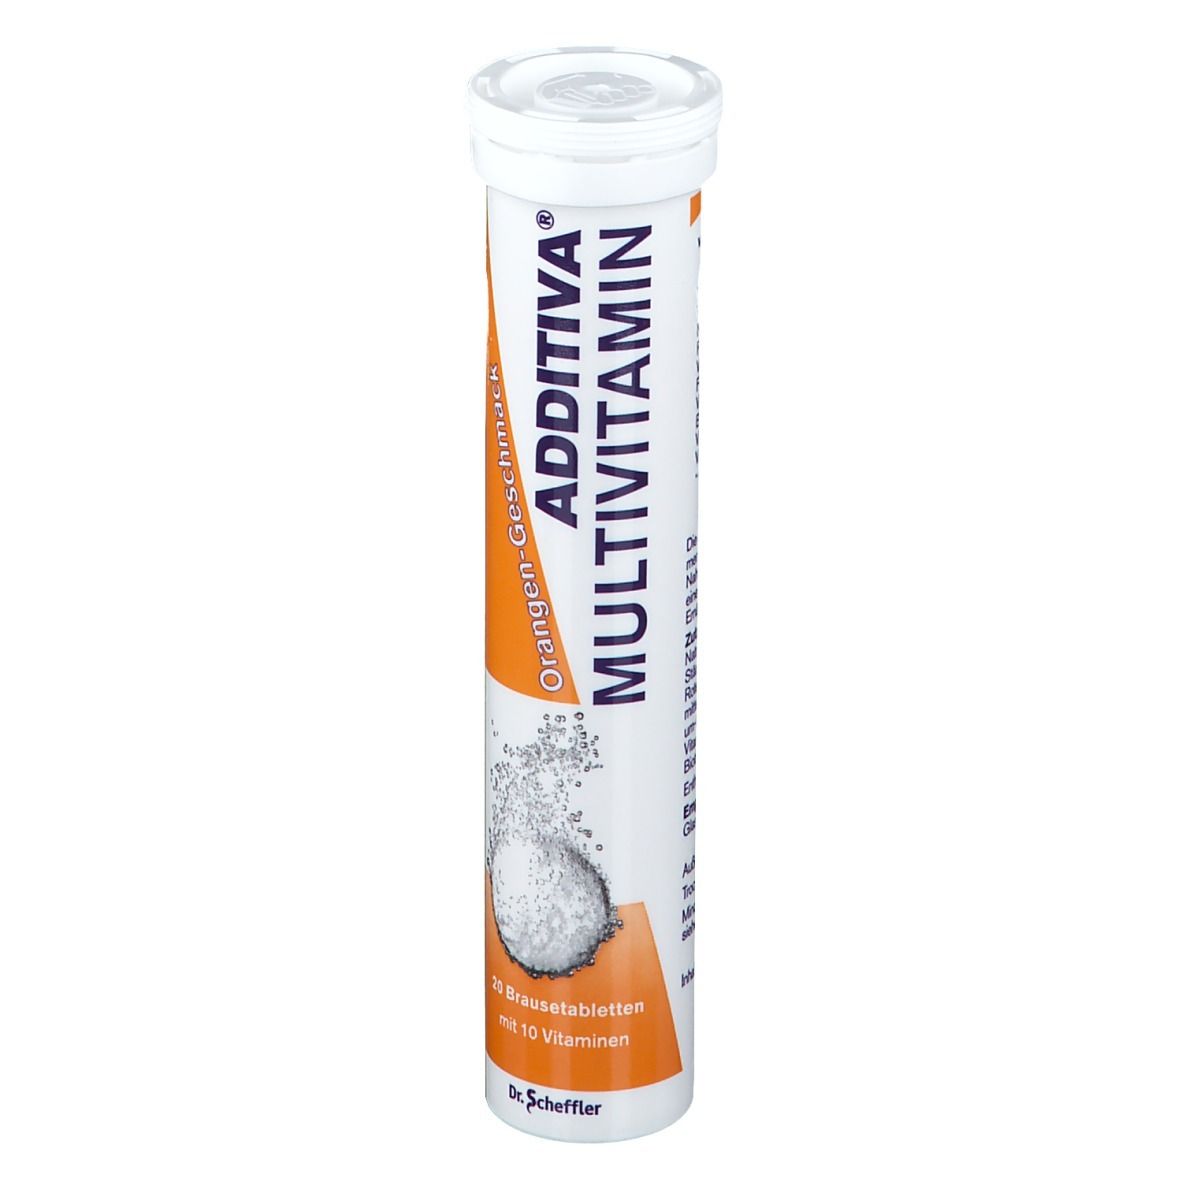 ADDITIVA® Multivitamin Brausetabletten Orangen-Geschmack